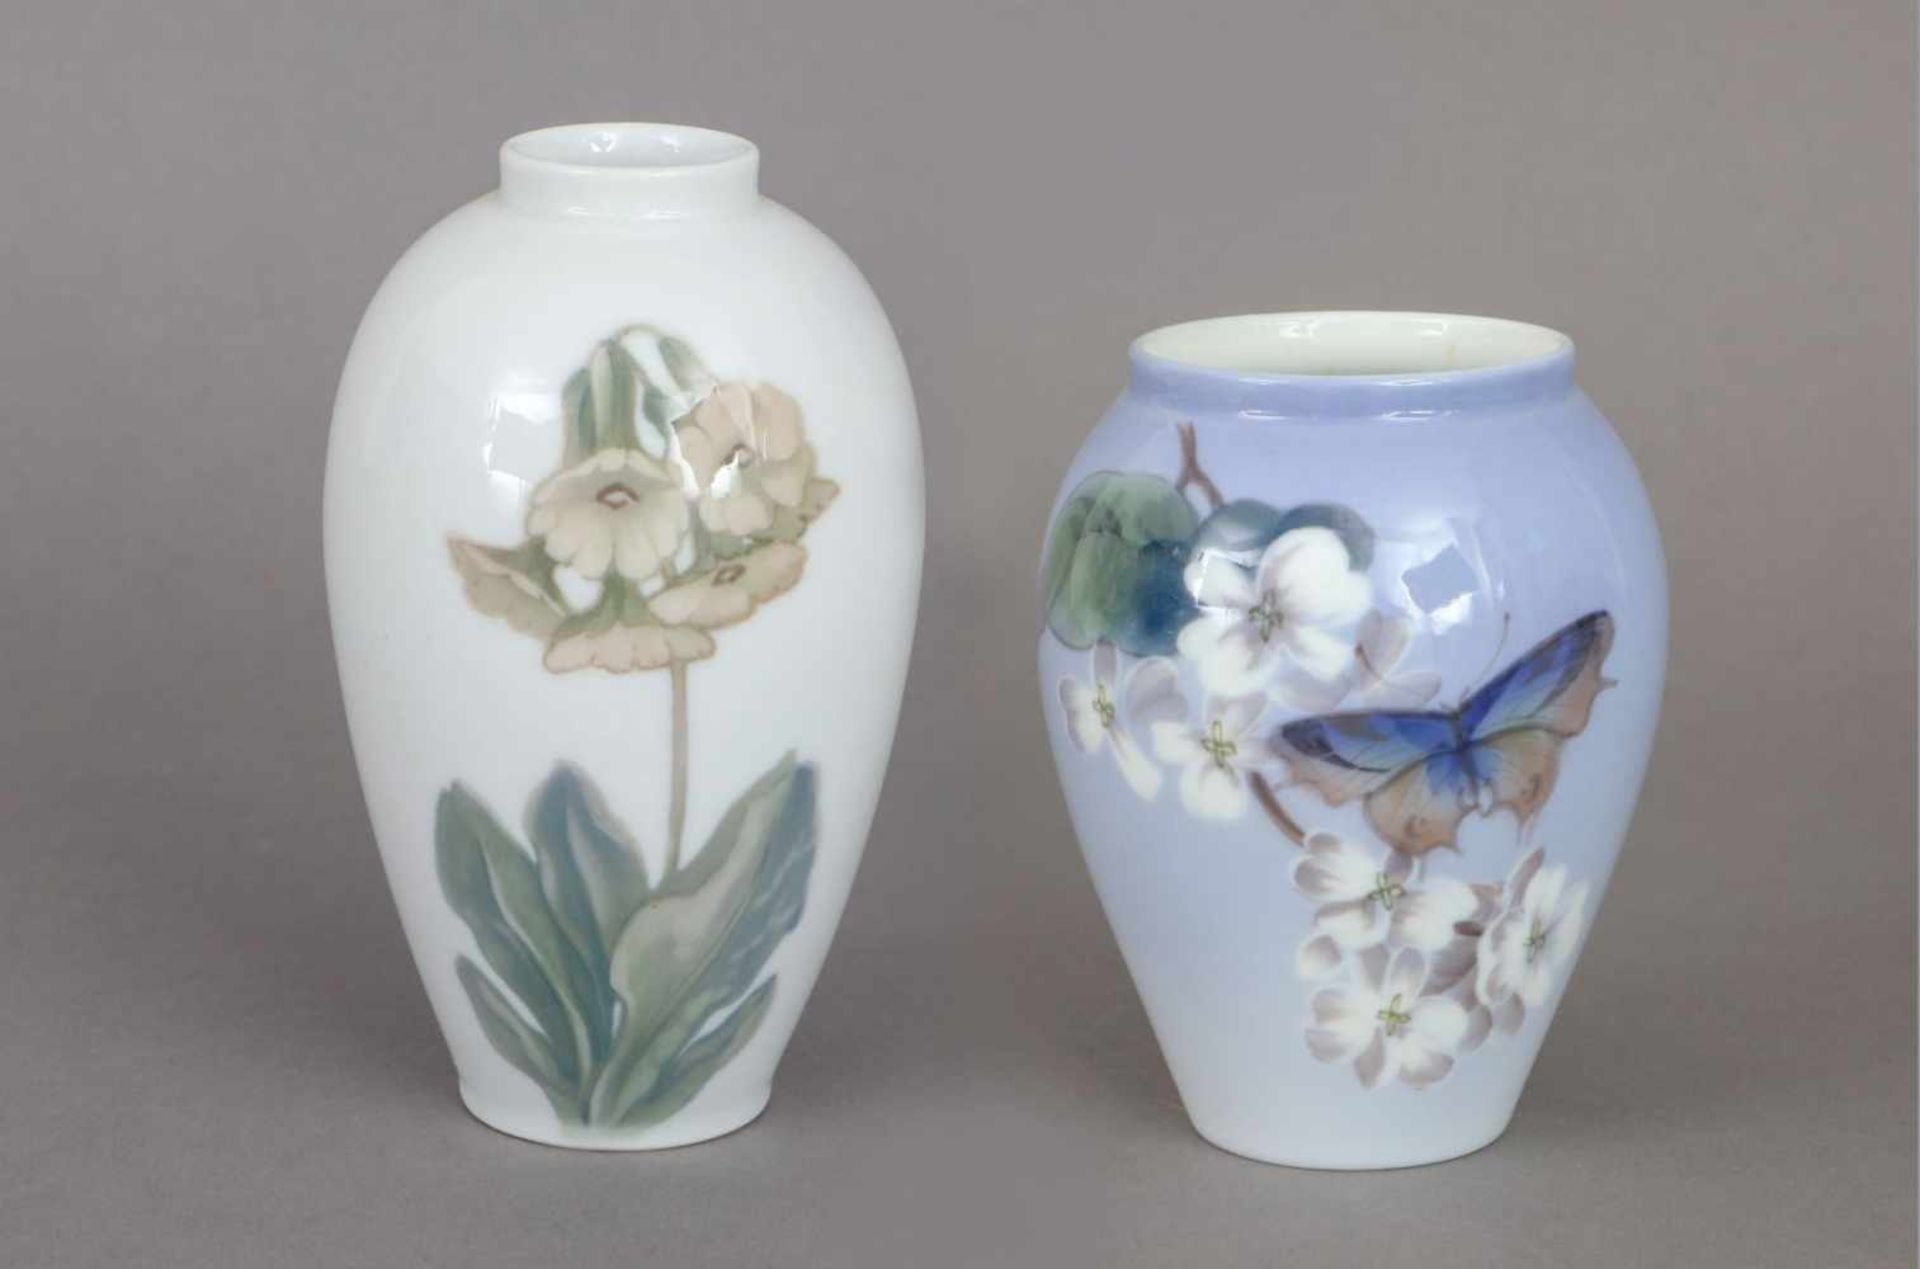 Paar ROYAL COPENHAGEN Vasen1960er Jahre, amphorenförmiger Korpus mit kurzem geraden Hals,